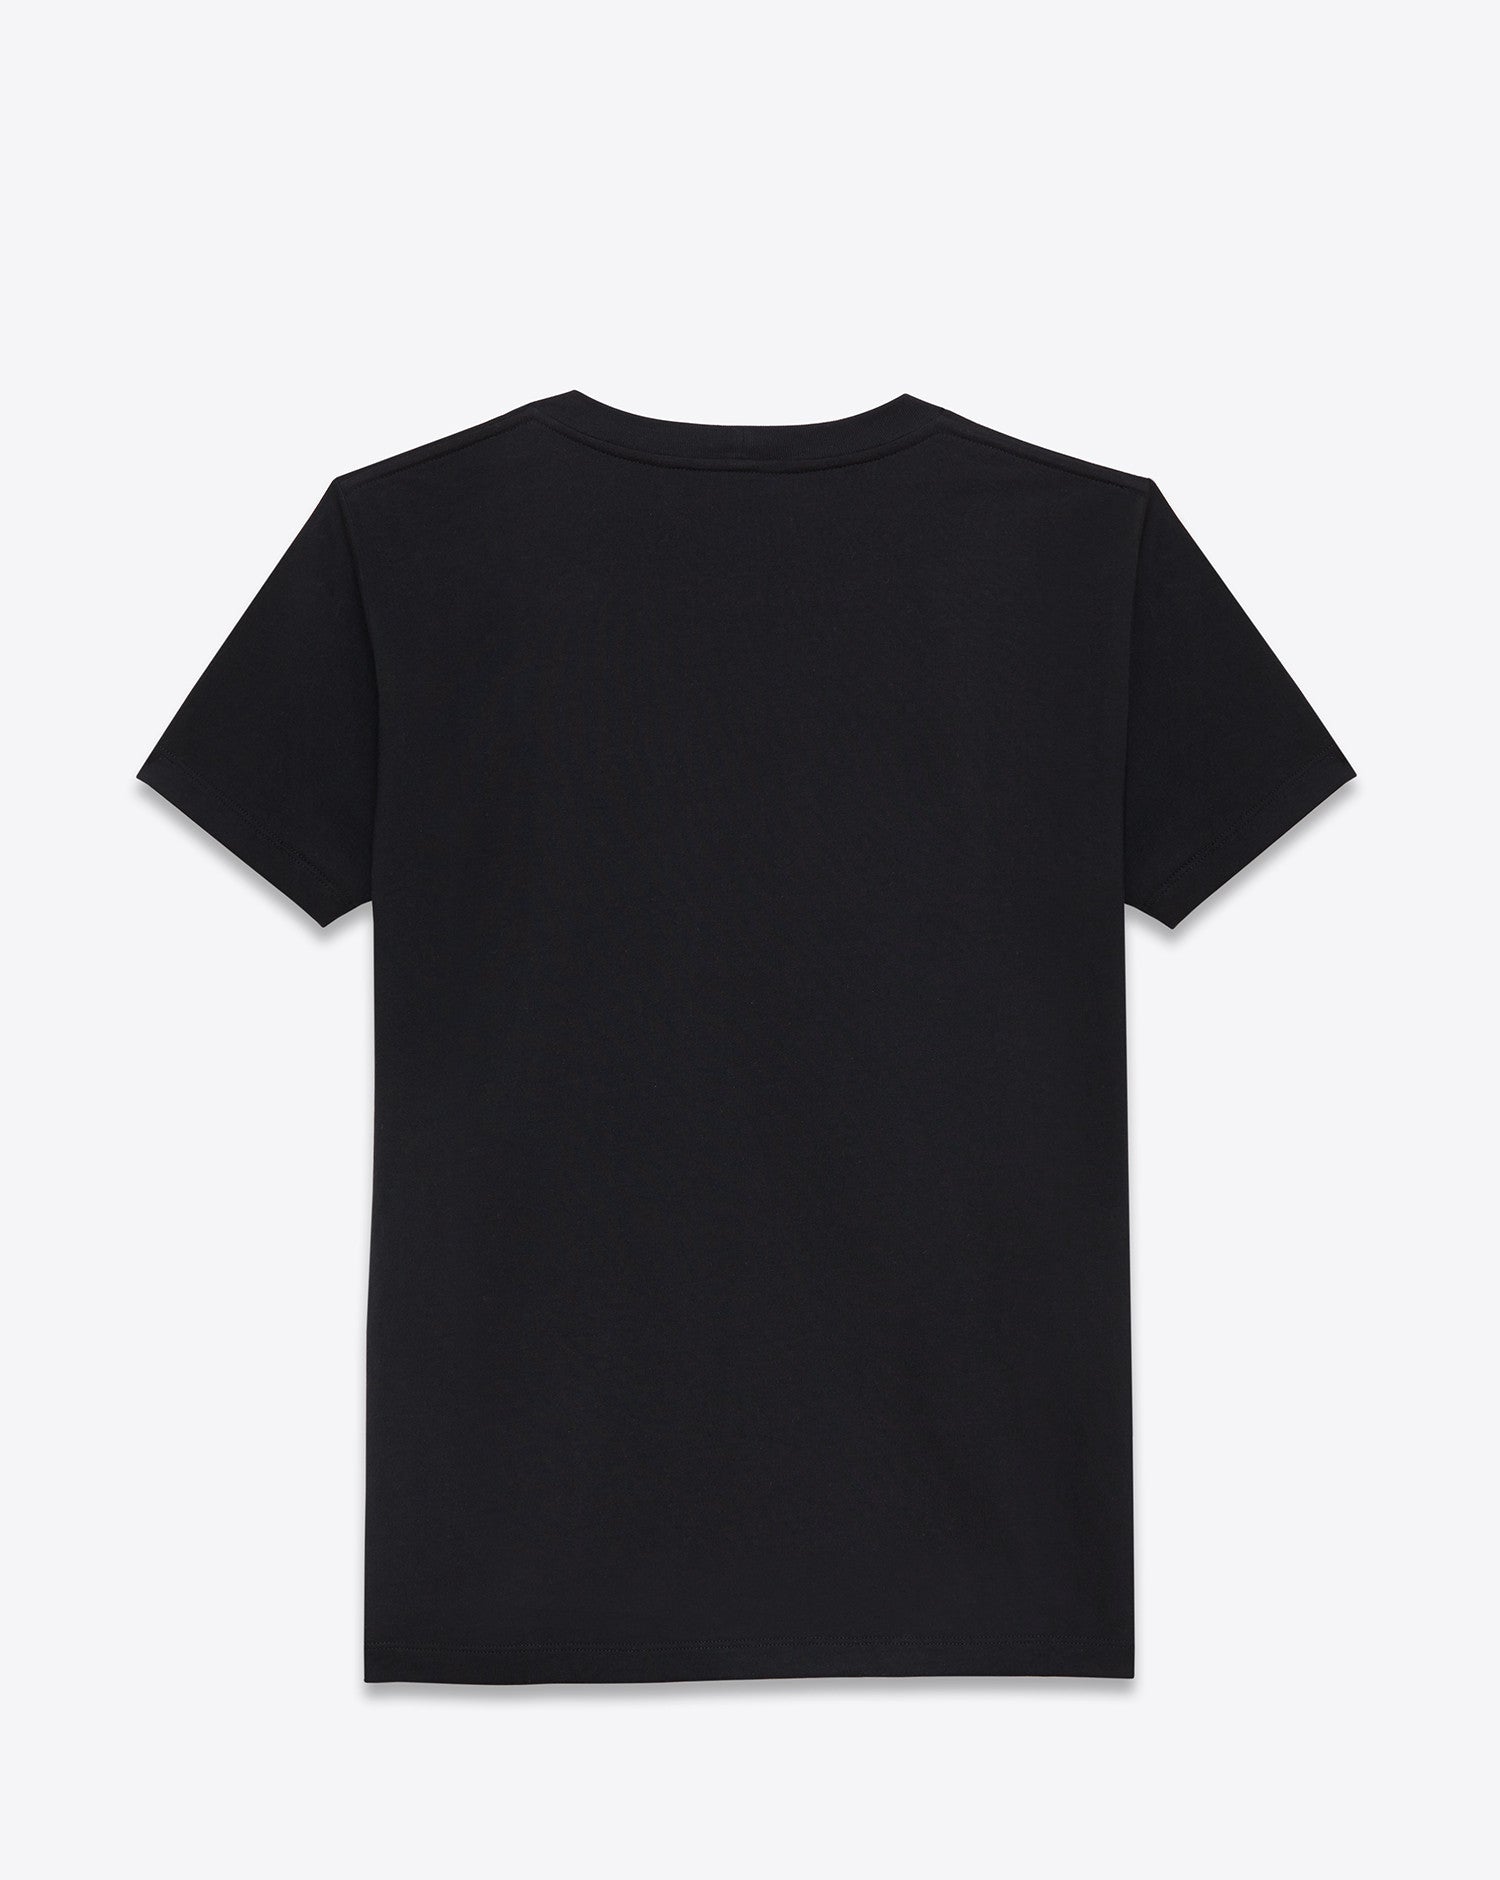 Wavy Baby T-Shirt Black - DEMEANOIR - 1